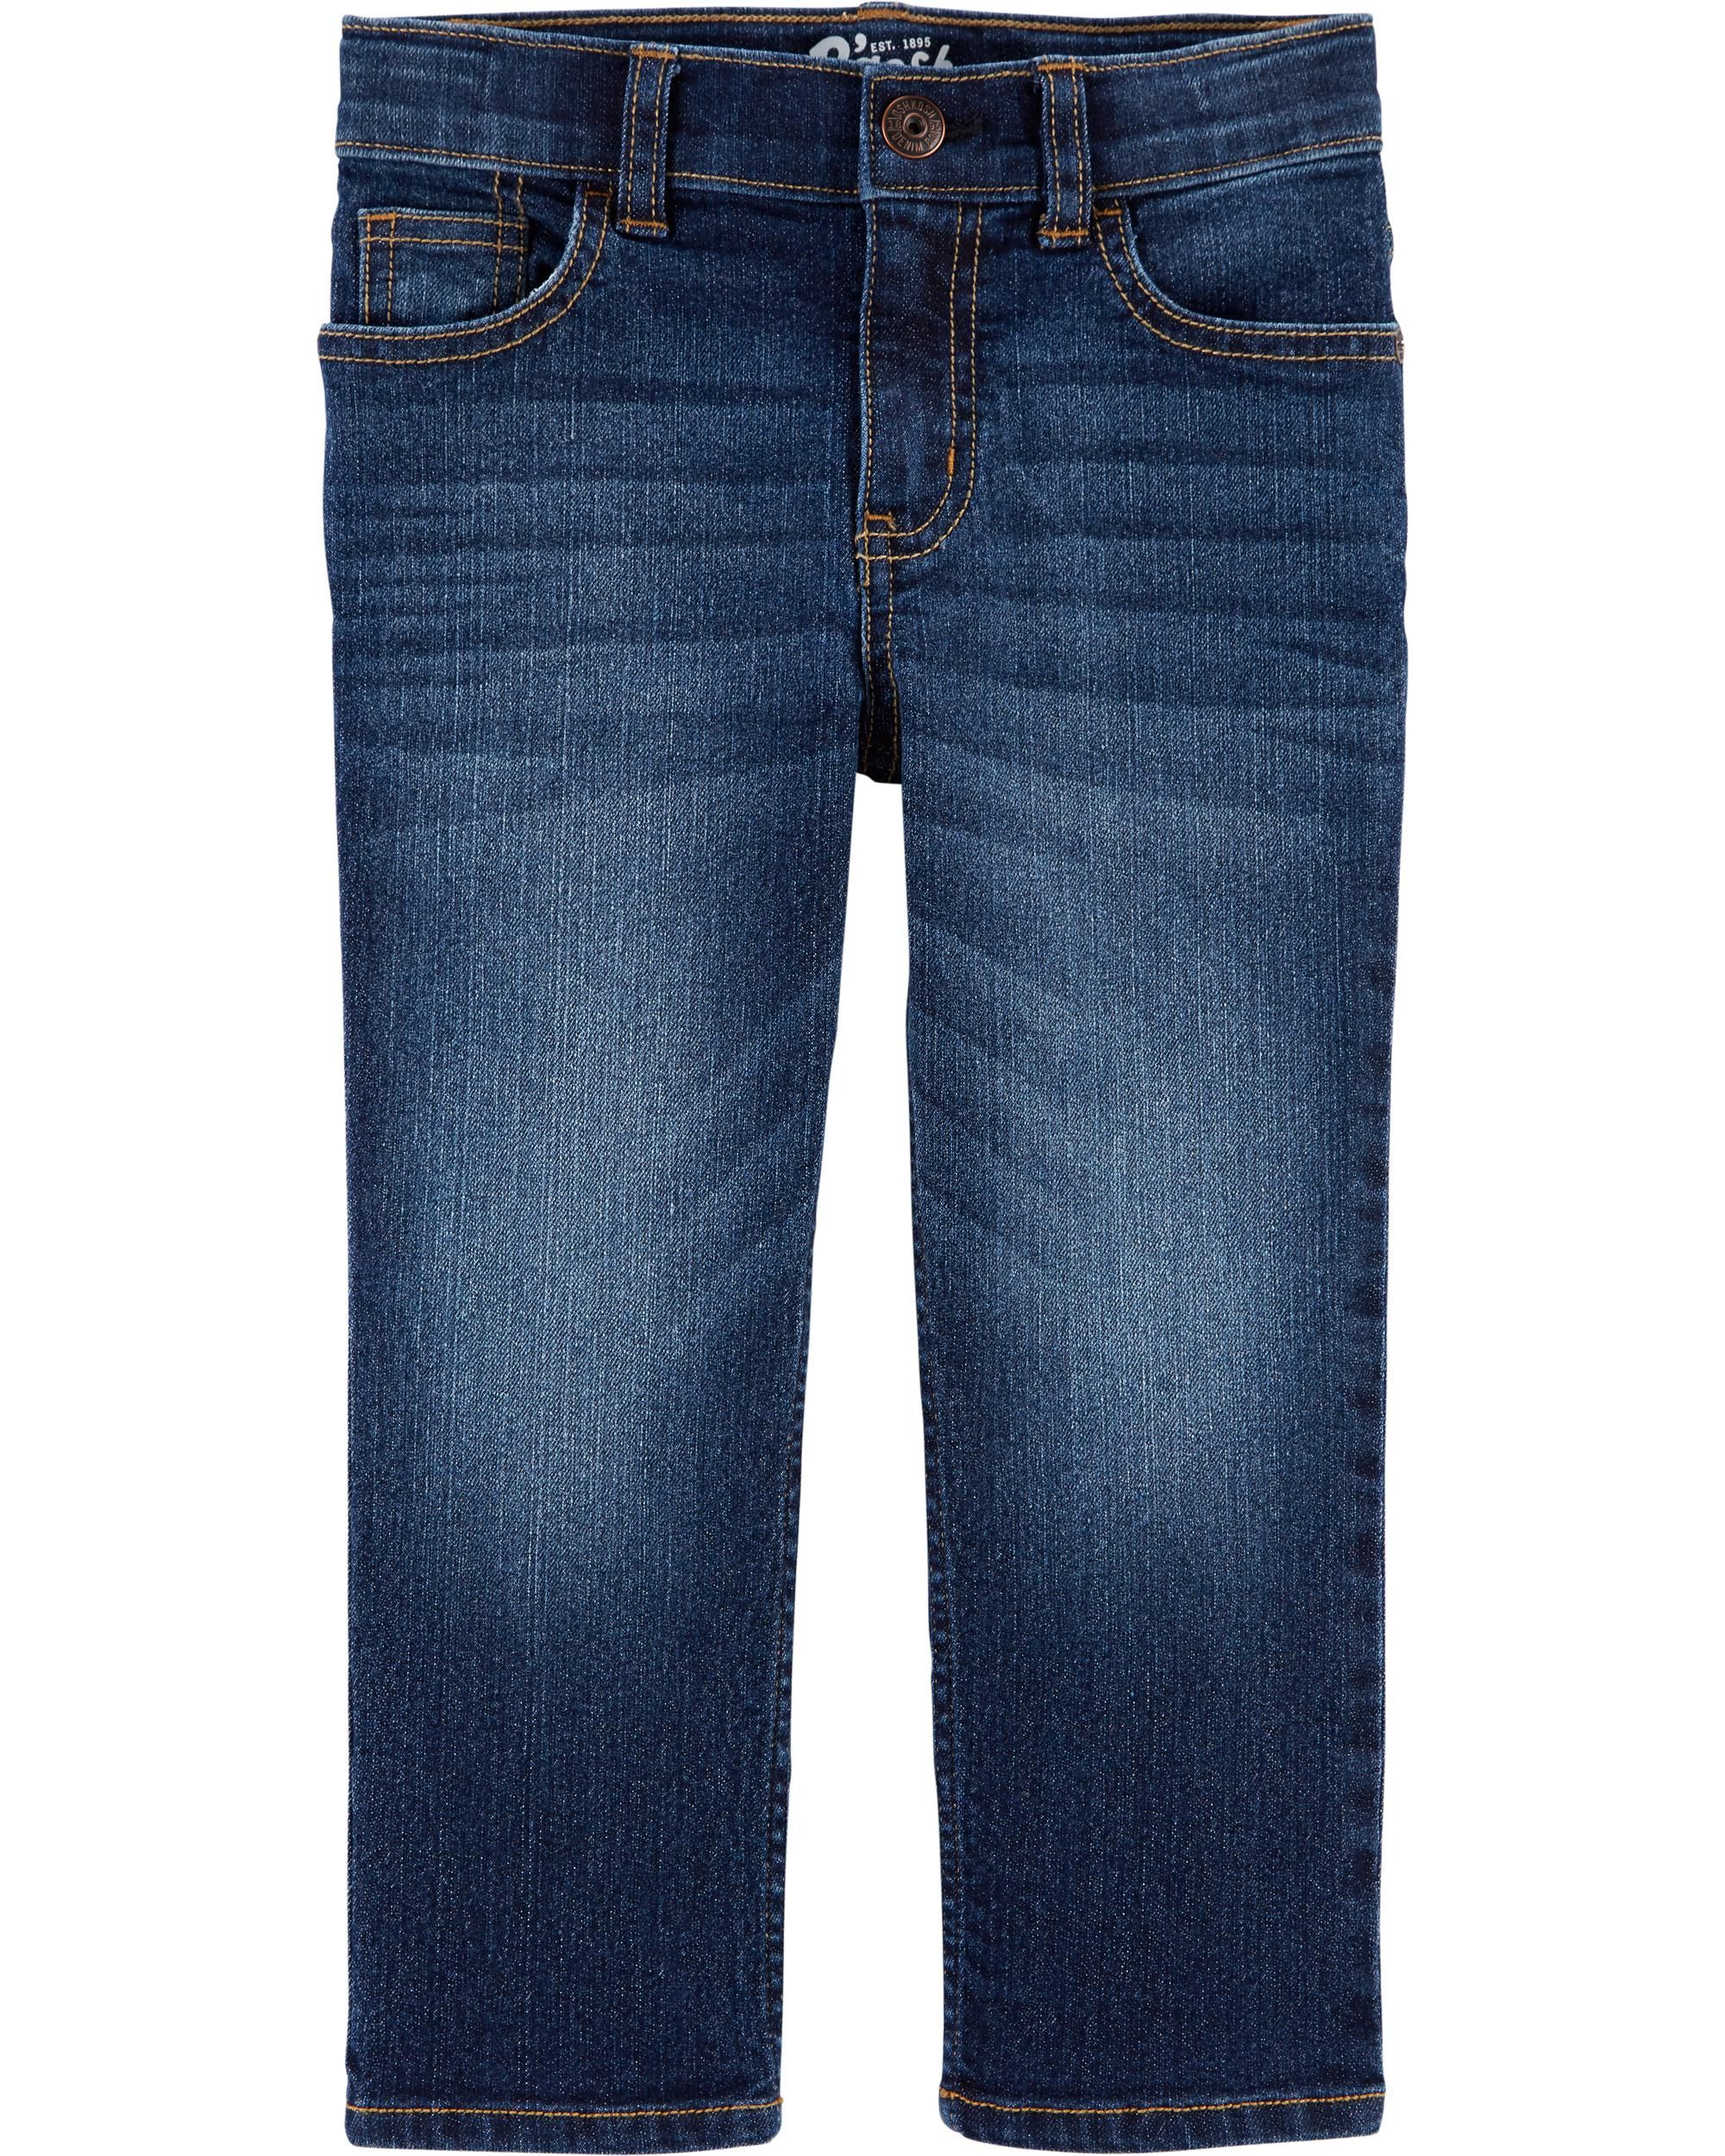 Classic Jeans in True Blue | OshKosh B'gosh